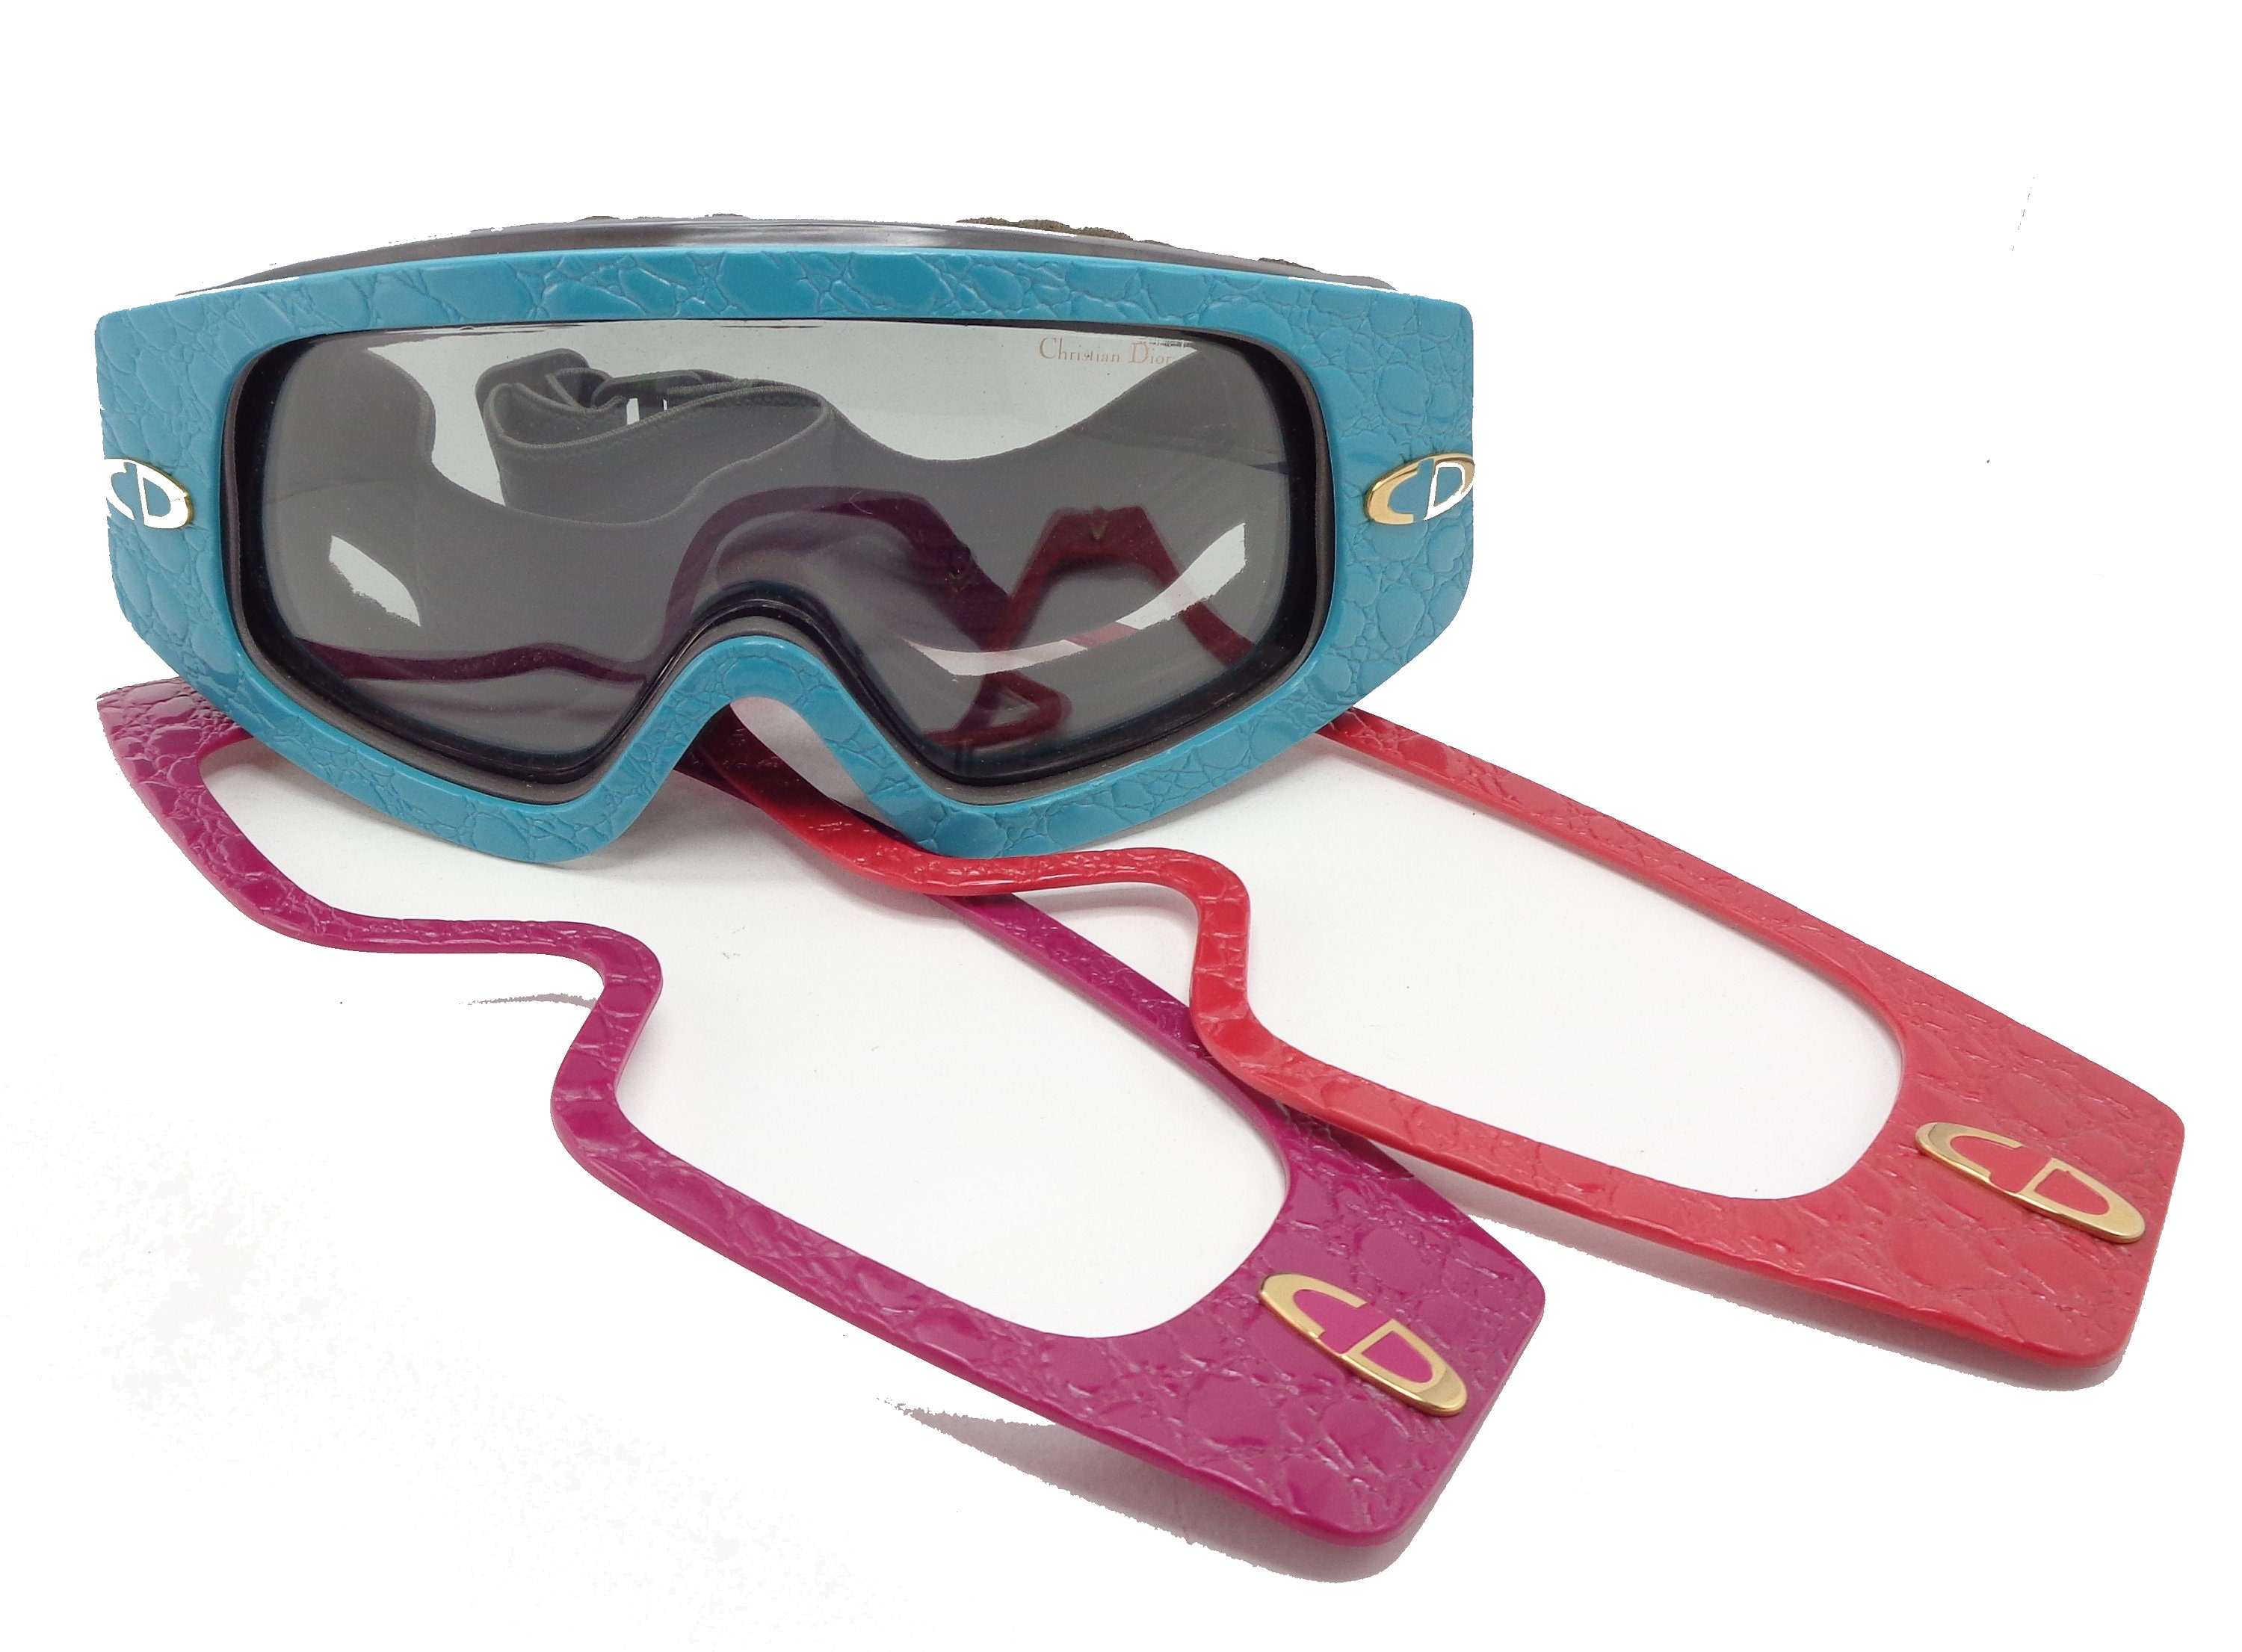 Christian Dior 2500 vintage ski goggles